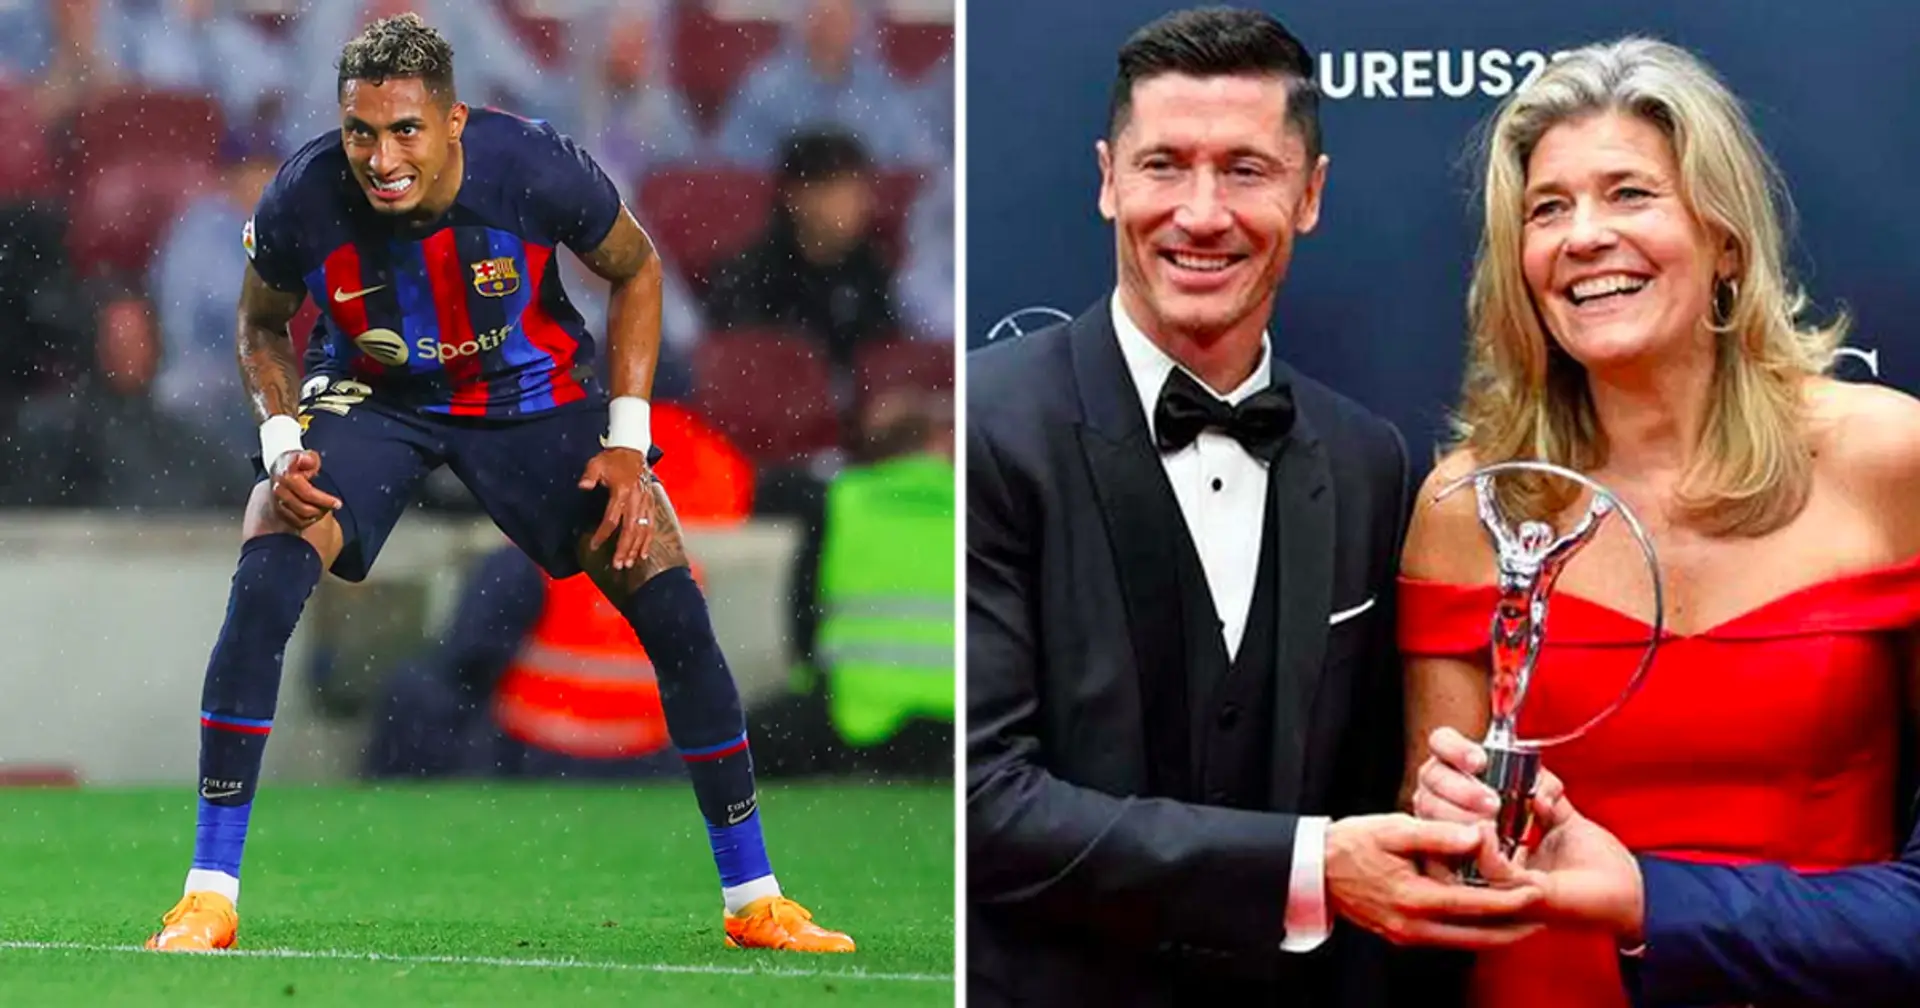 Barca's back-up striker injured 'for months' and 3 more big stories you might've missed